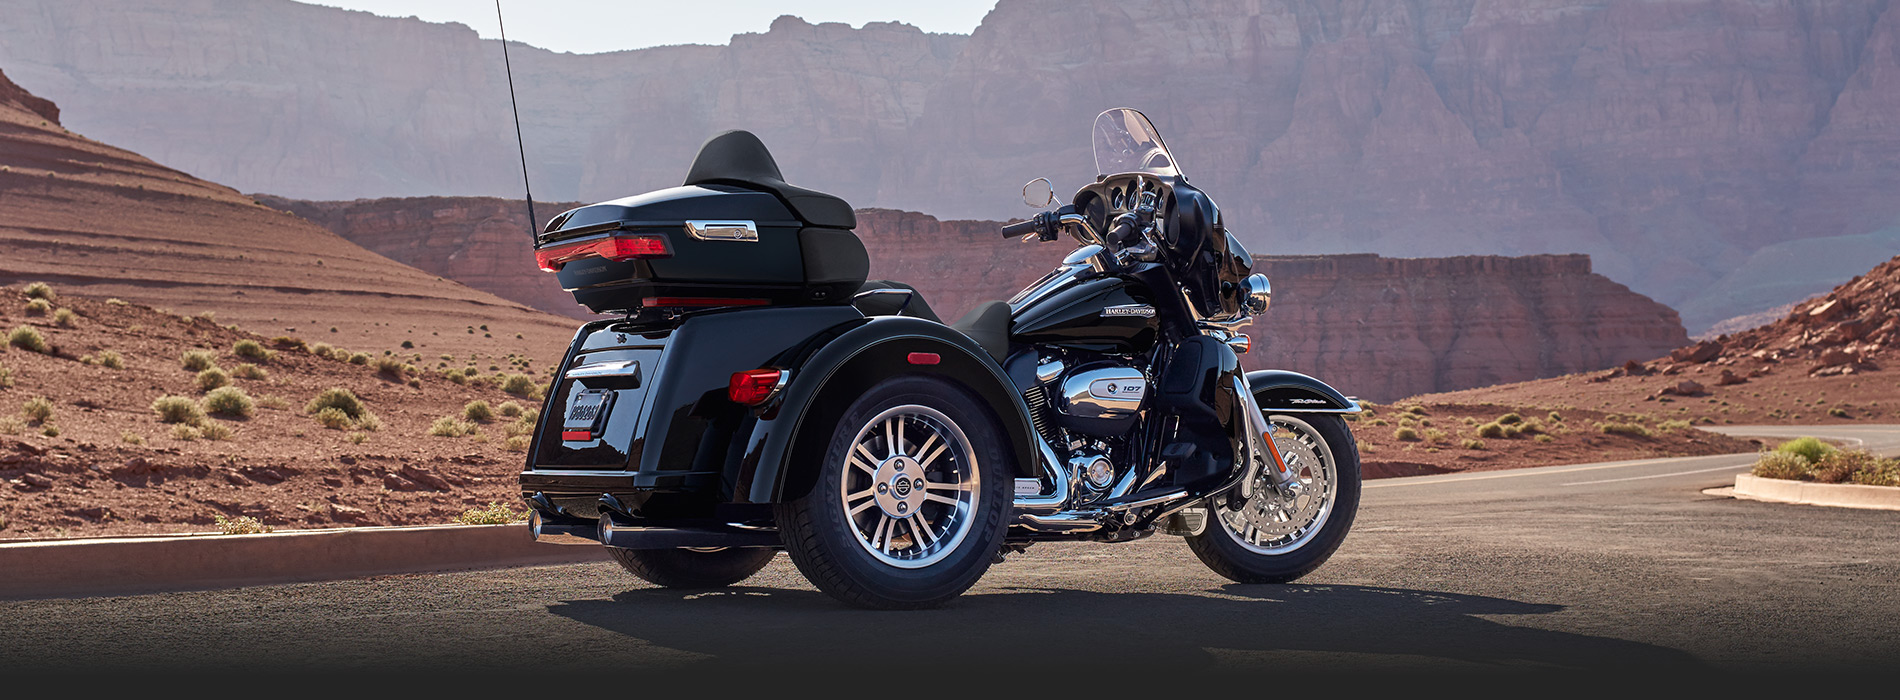 HQ Harley-Davidson Tri Glide Ultra Wallpapers | File 426.71Kb